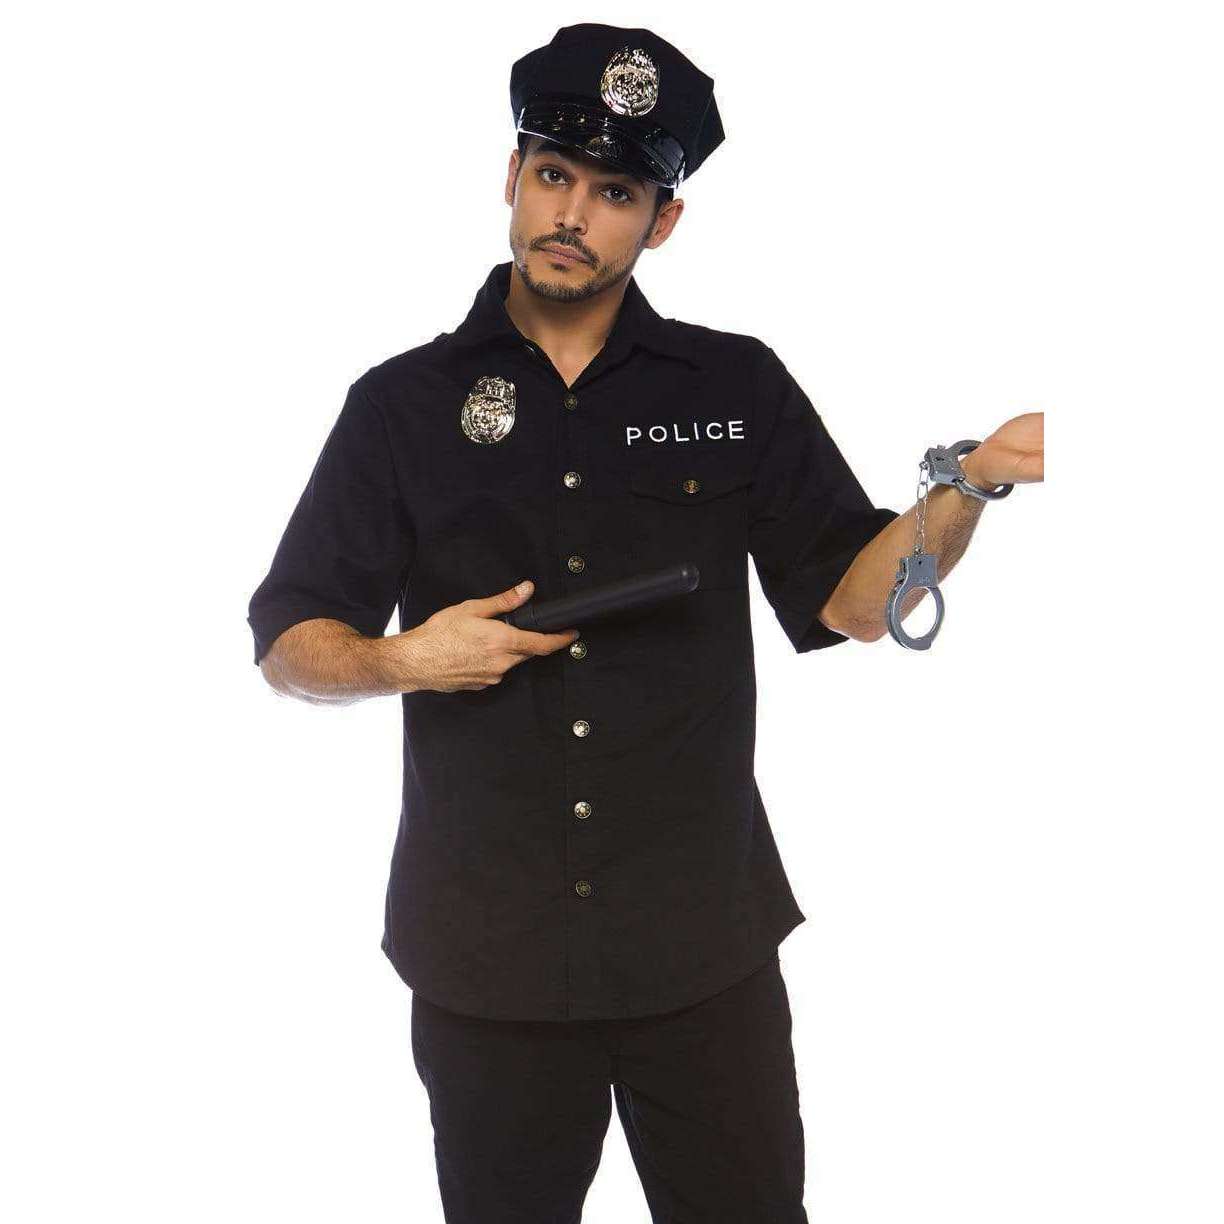 Cuff 'Em Cop Adult Police Uniform Costume